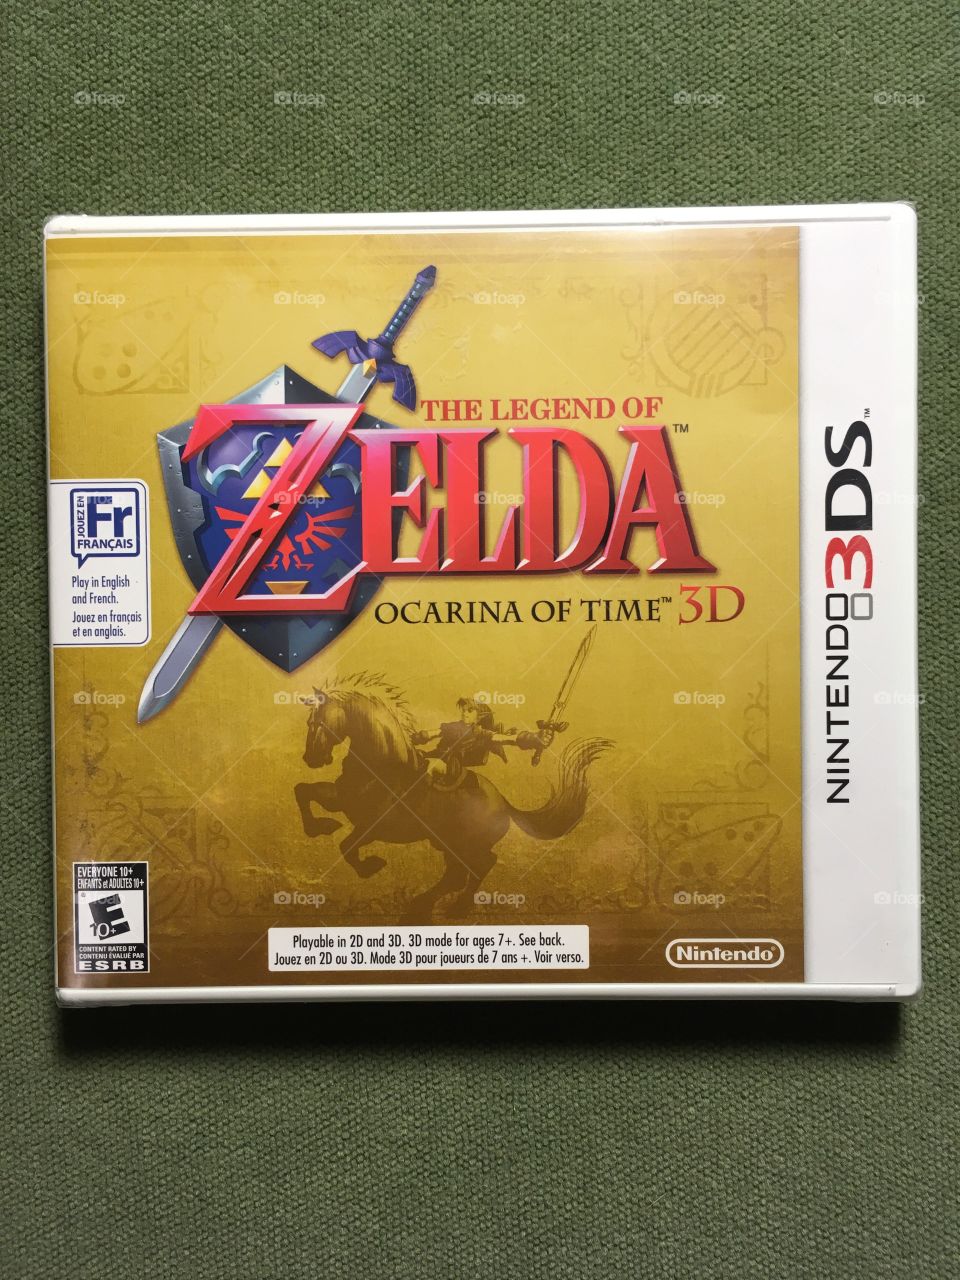 The Legend of Zelda - Ocarina of Time 3D
For Nintendo 3DS
Released 2011